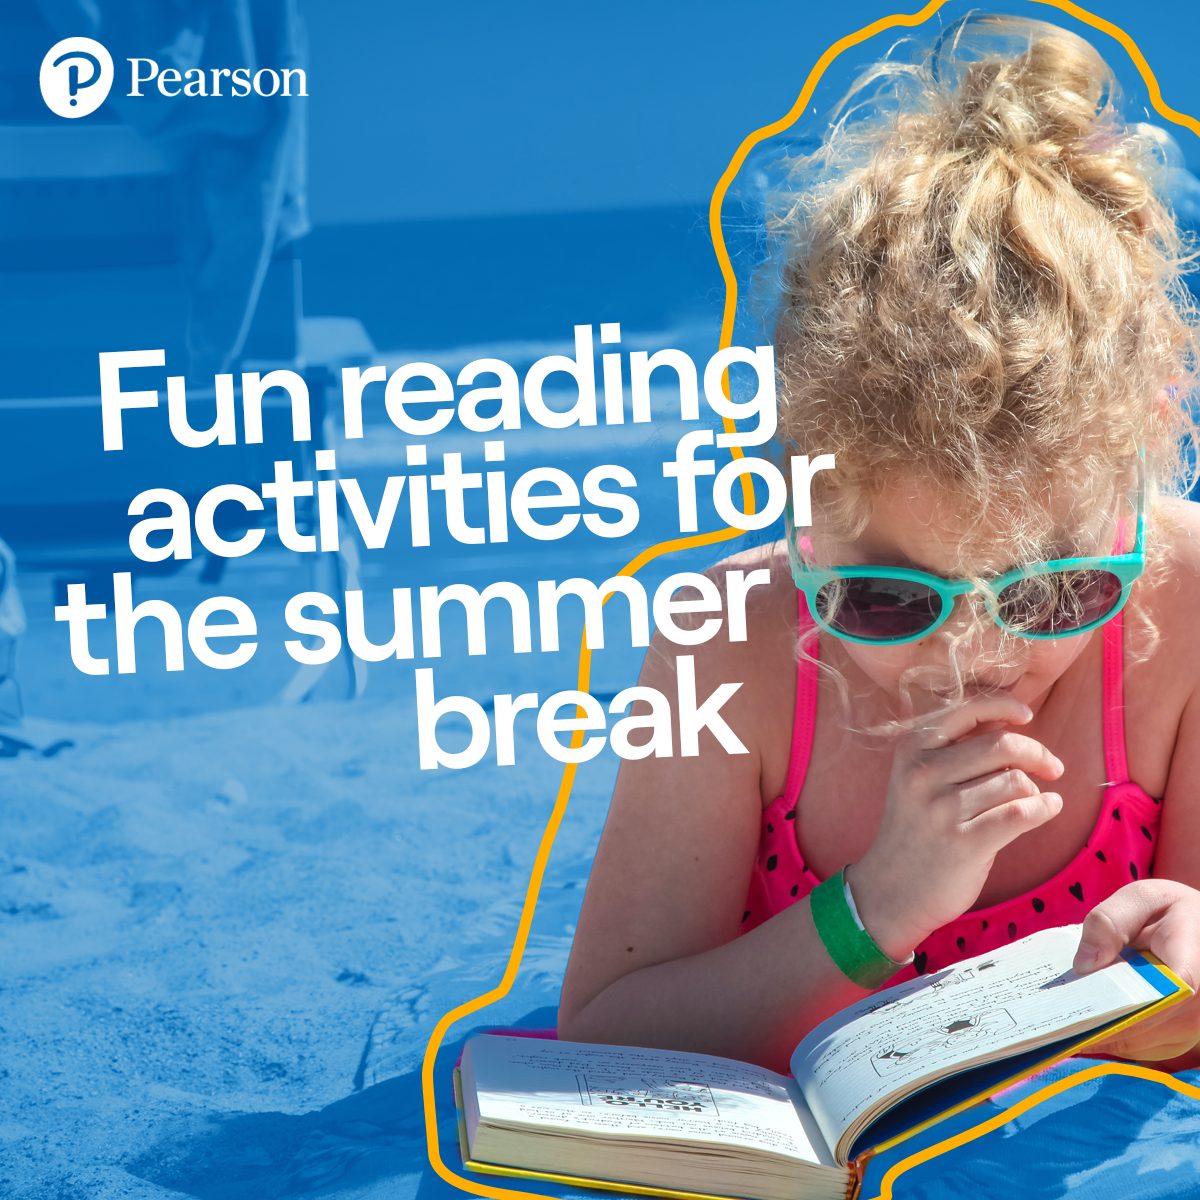 Fun reading activities for the summer break